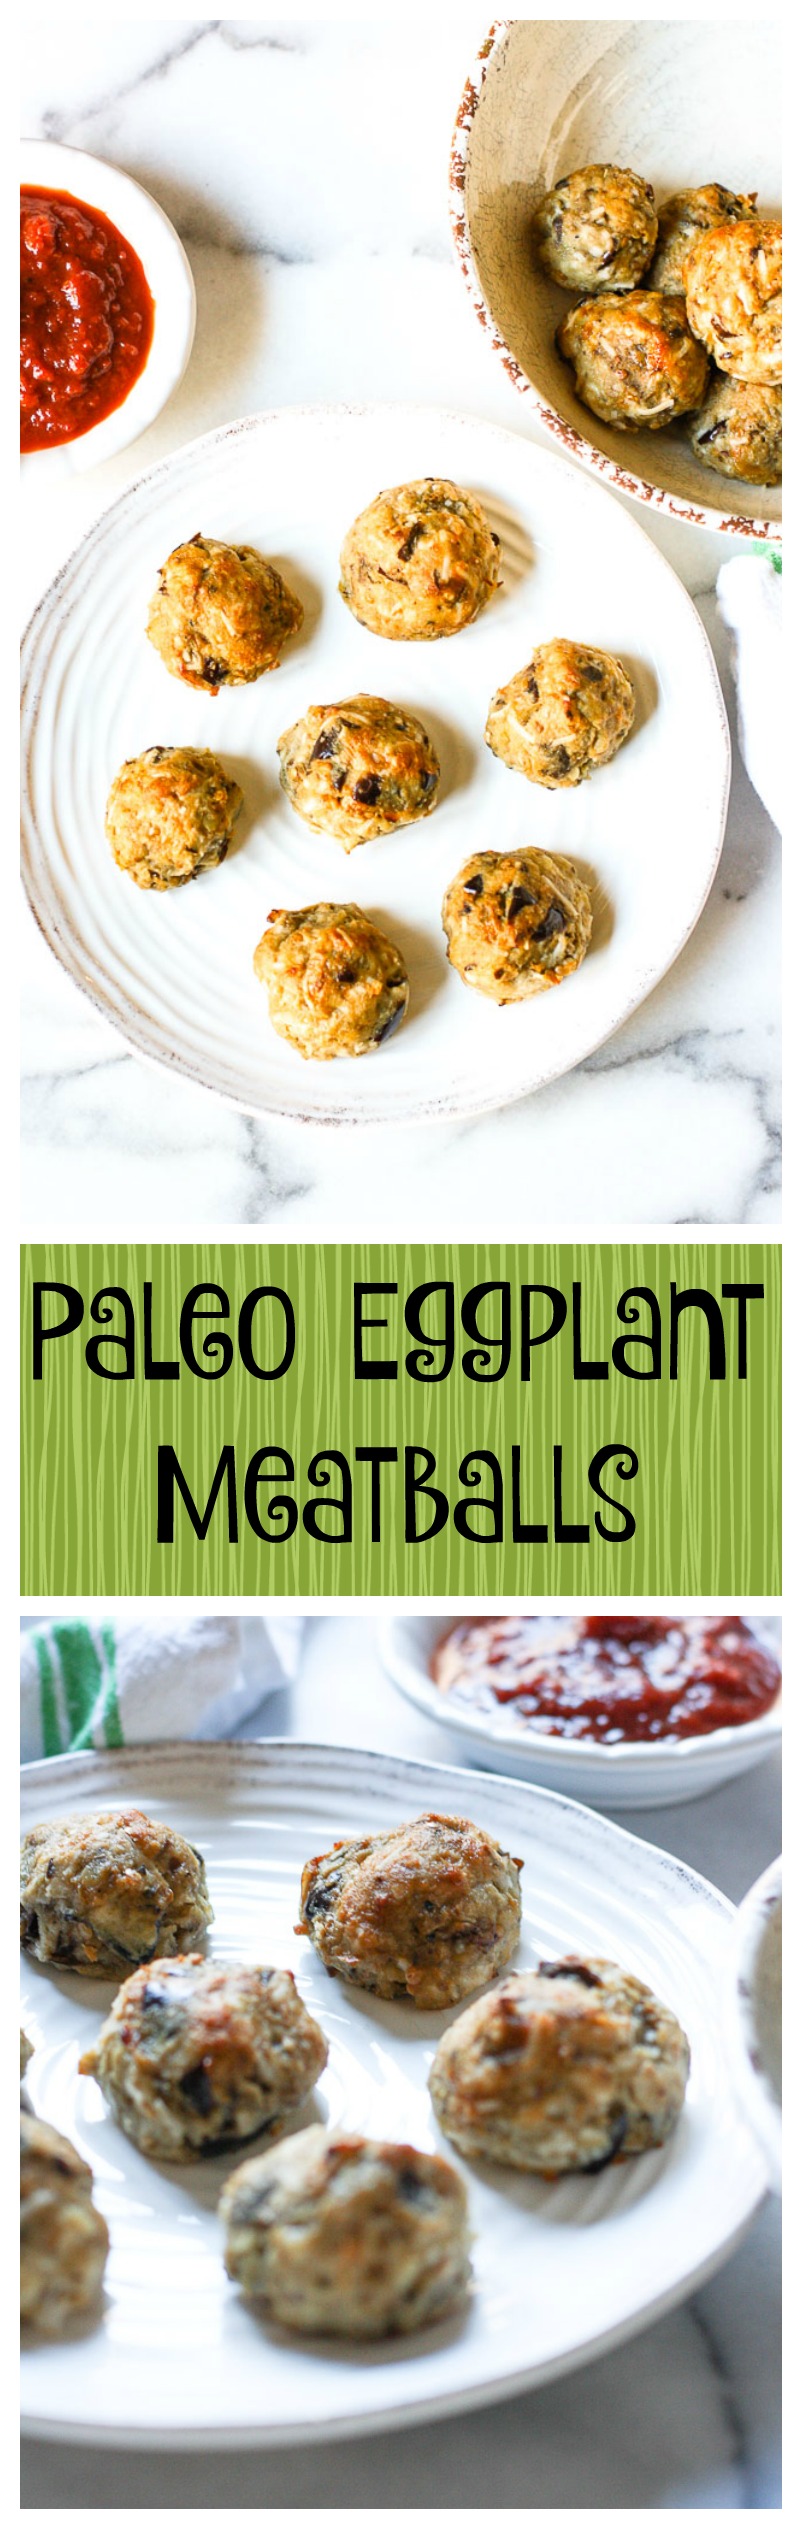 paleo eggplant meatballs